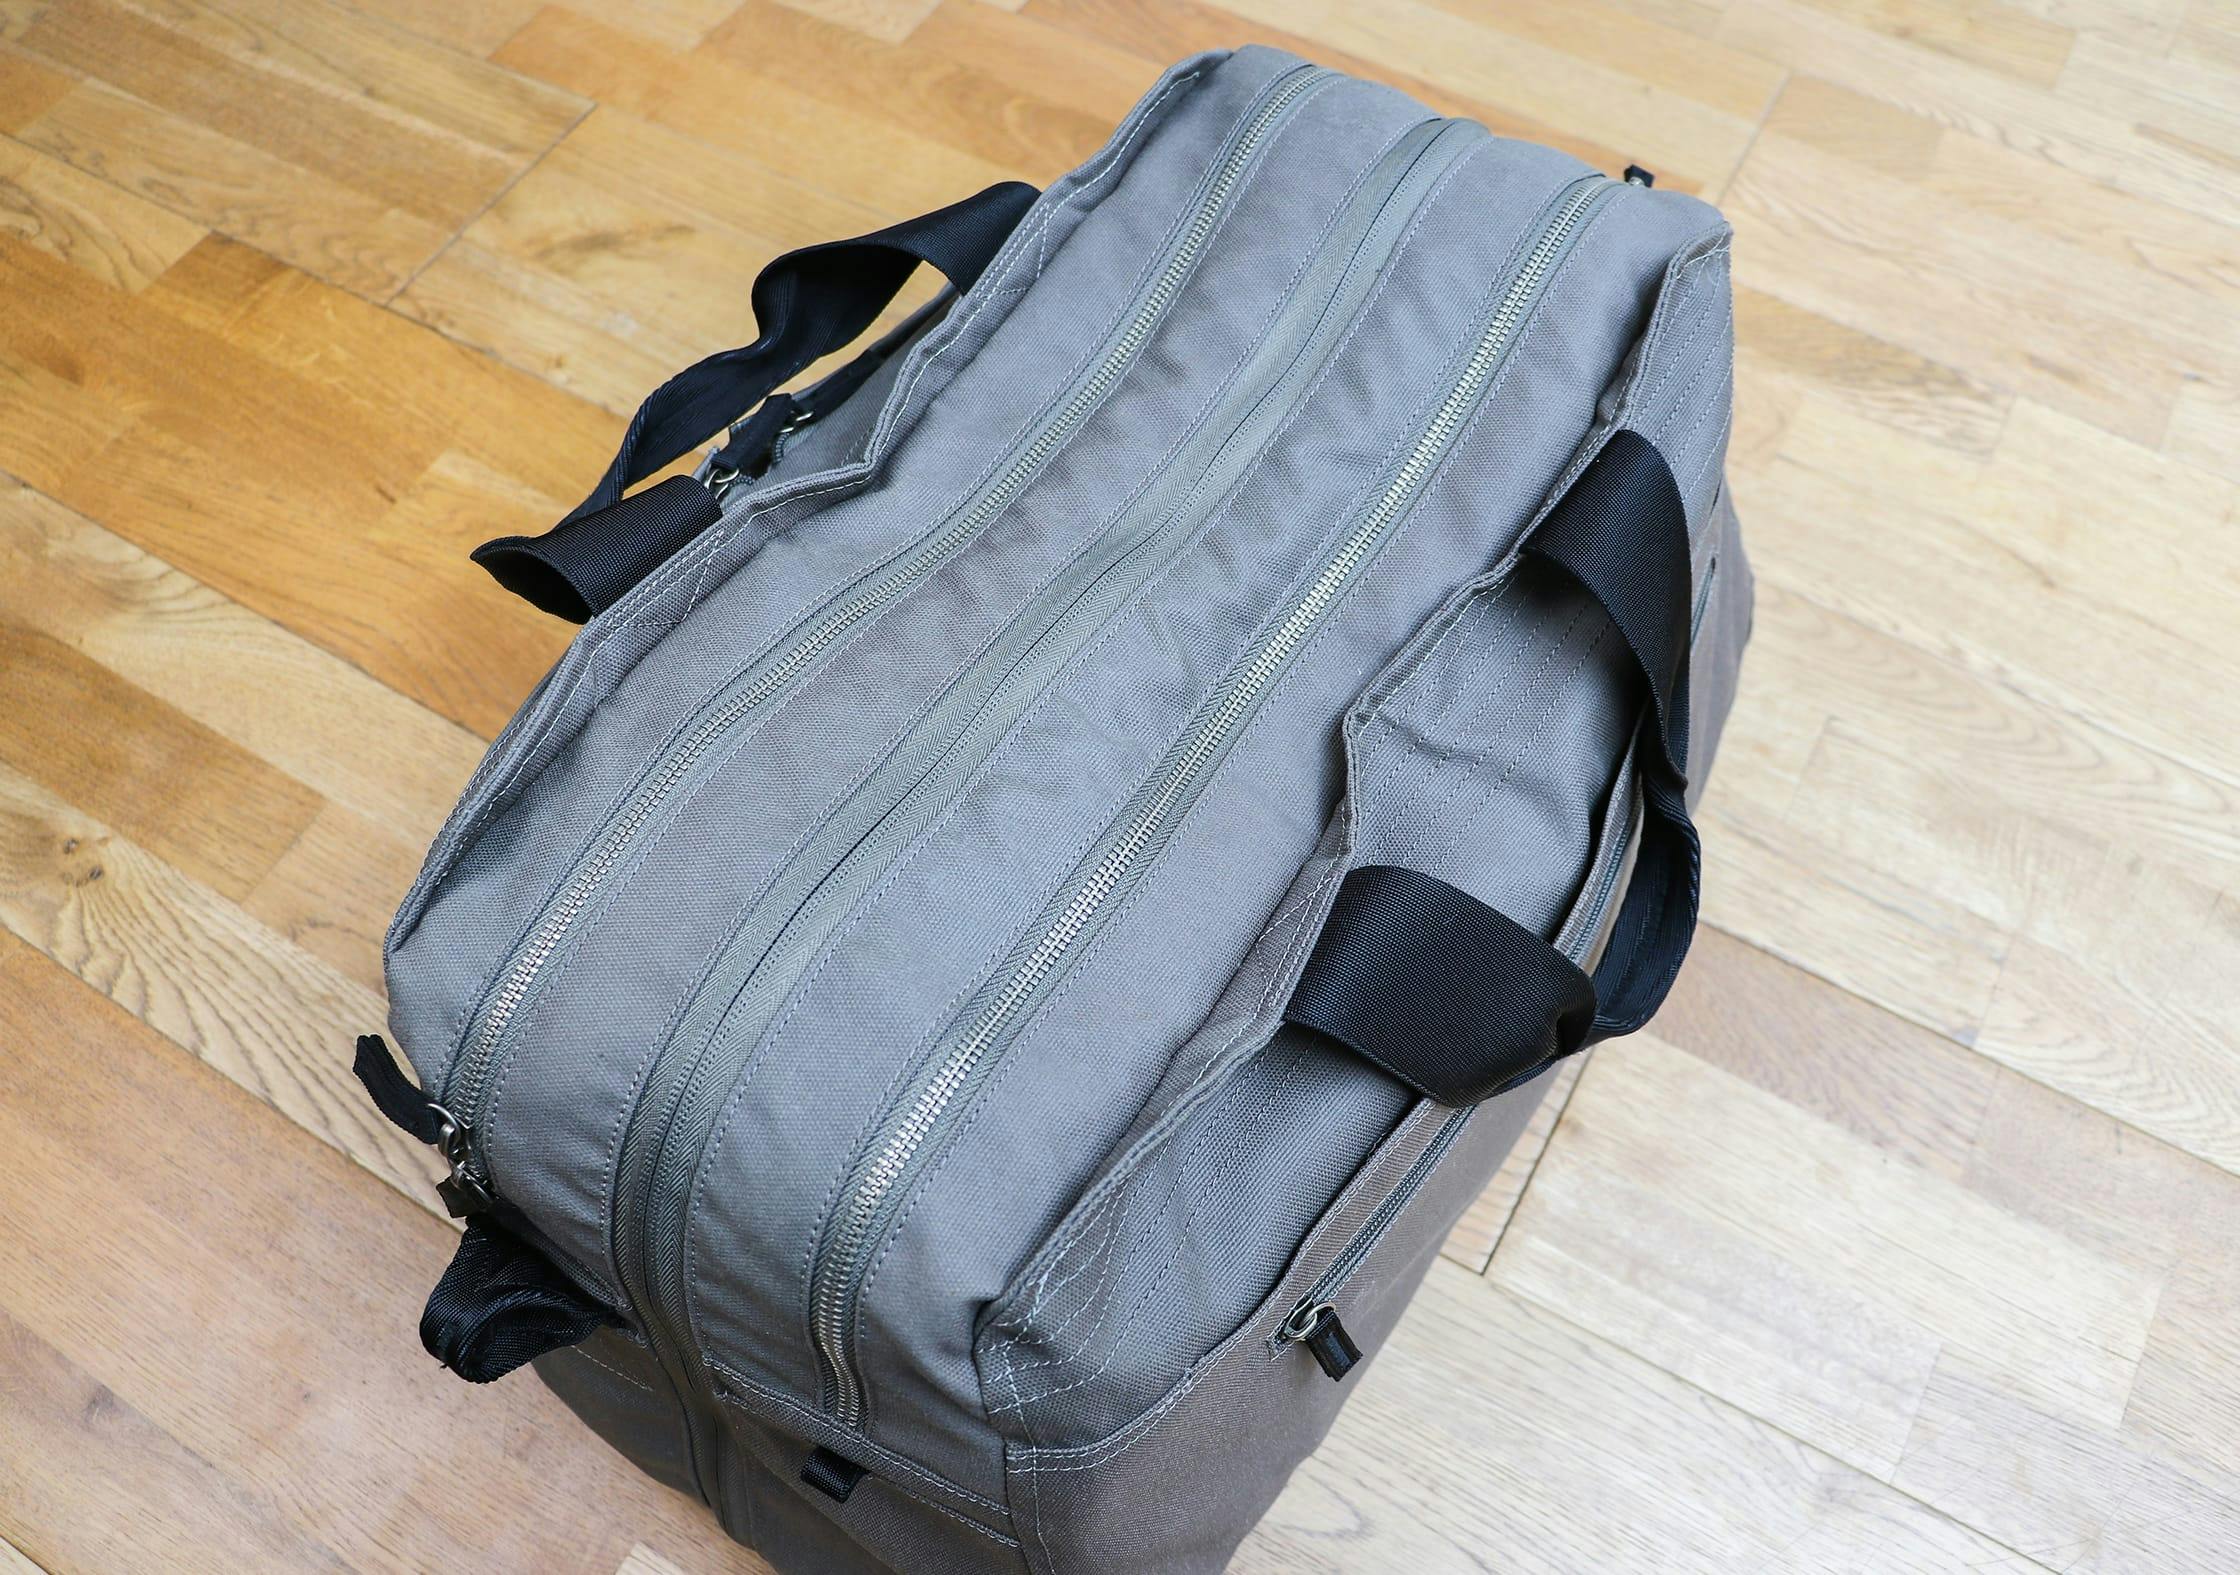 Pakt One 35L Duffel Travel Bag Review | Pack Hacker